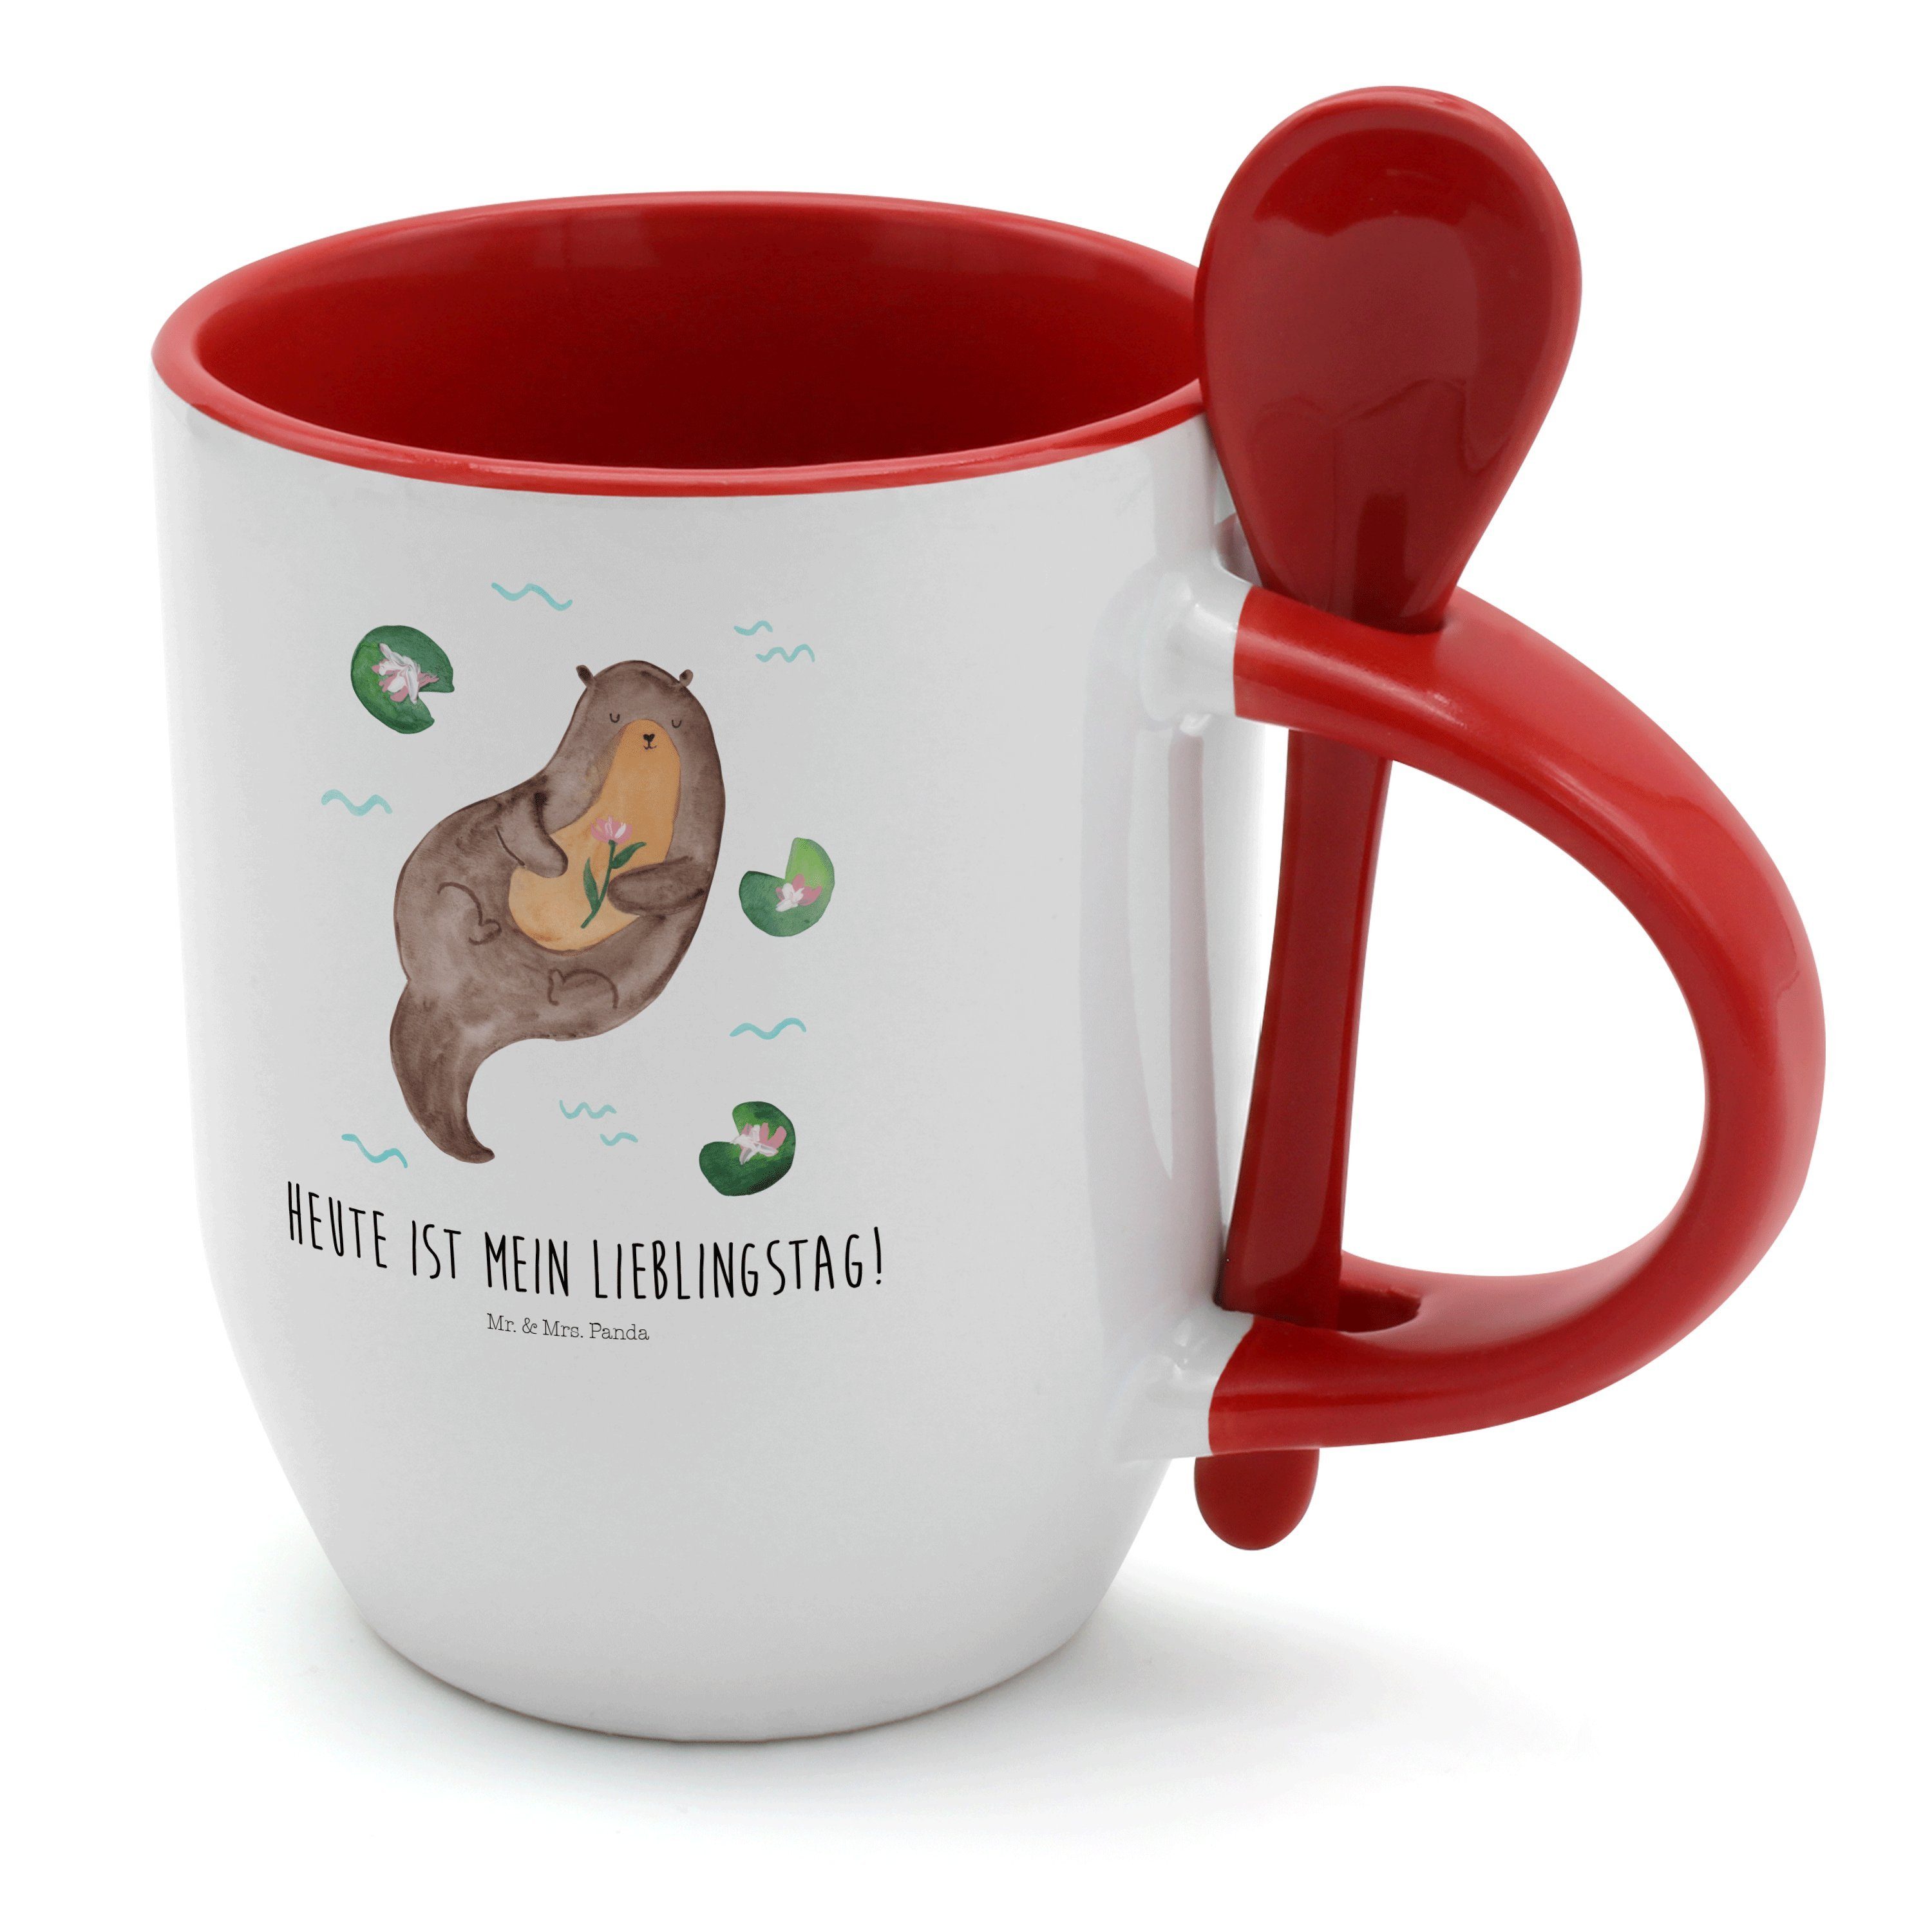 Mr. & Mrs. Panda Tasse Otter mit Seerose - Weiß - Geschenk, Tassen, Kaffeetasse, Seeotter, T, Keramik